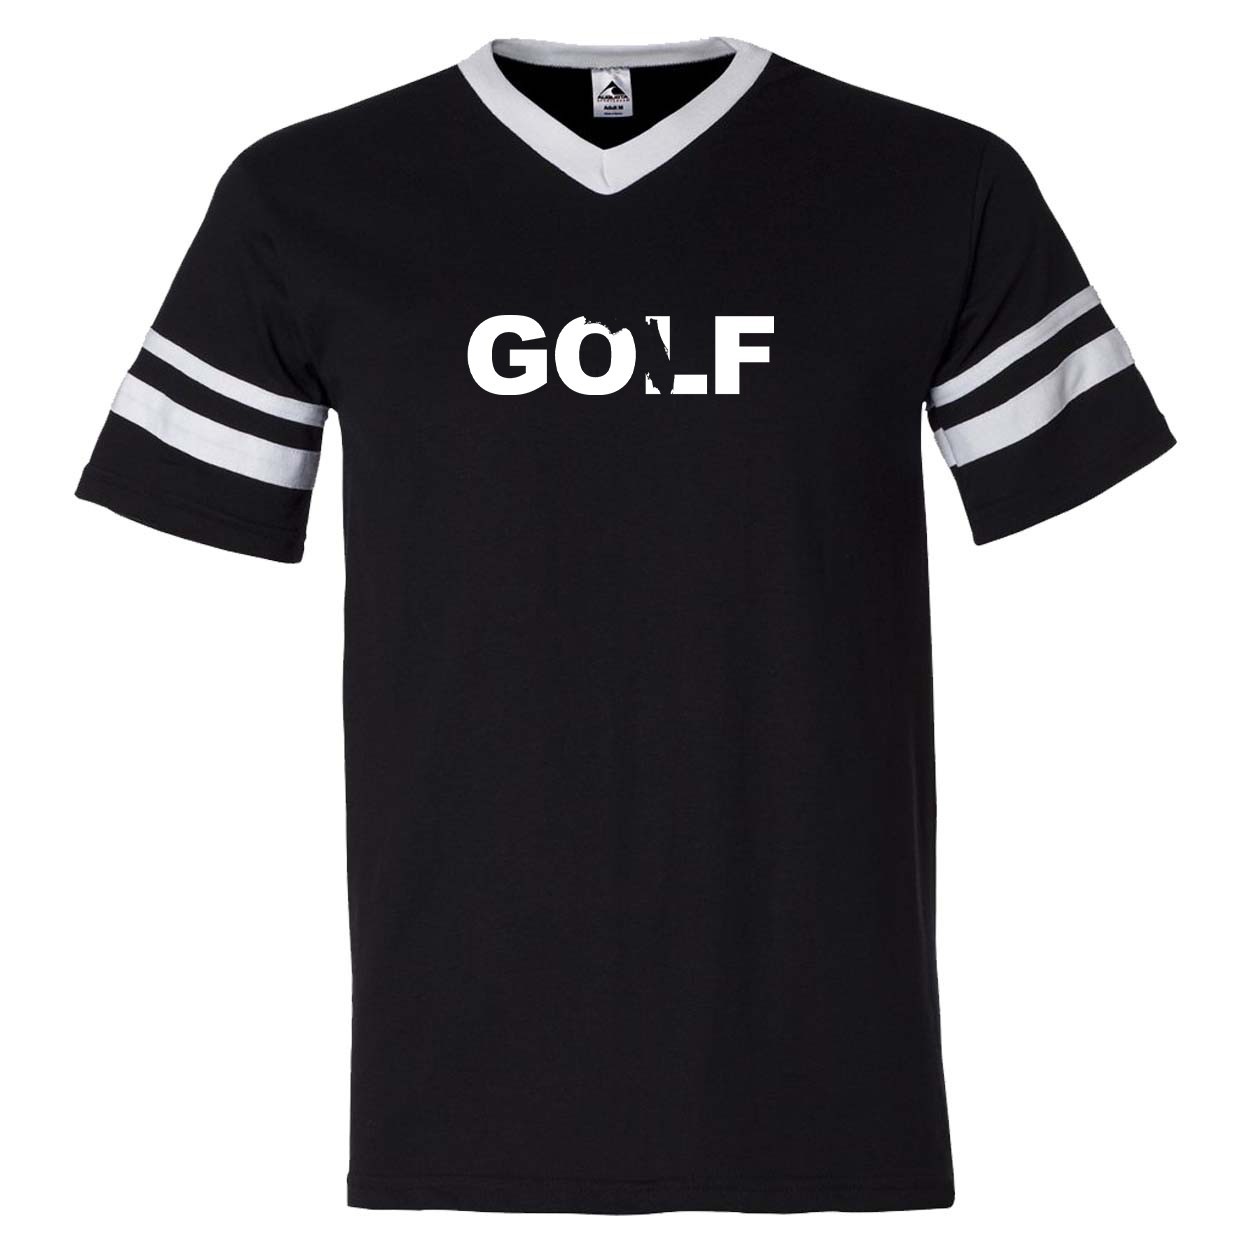 Golf Florida Classic Premium Striped Jersey T-Shirt Black/White (White Logo)